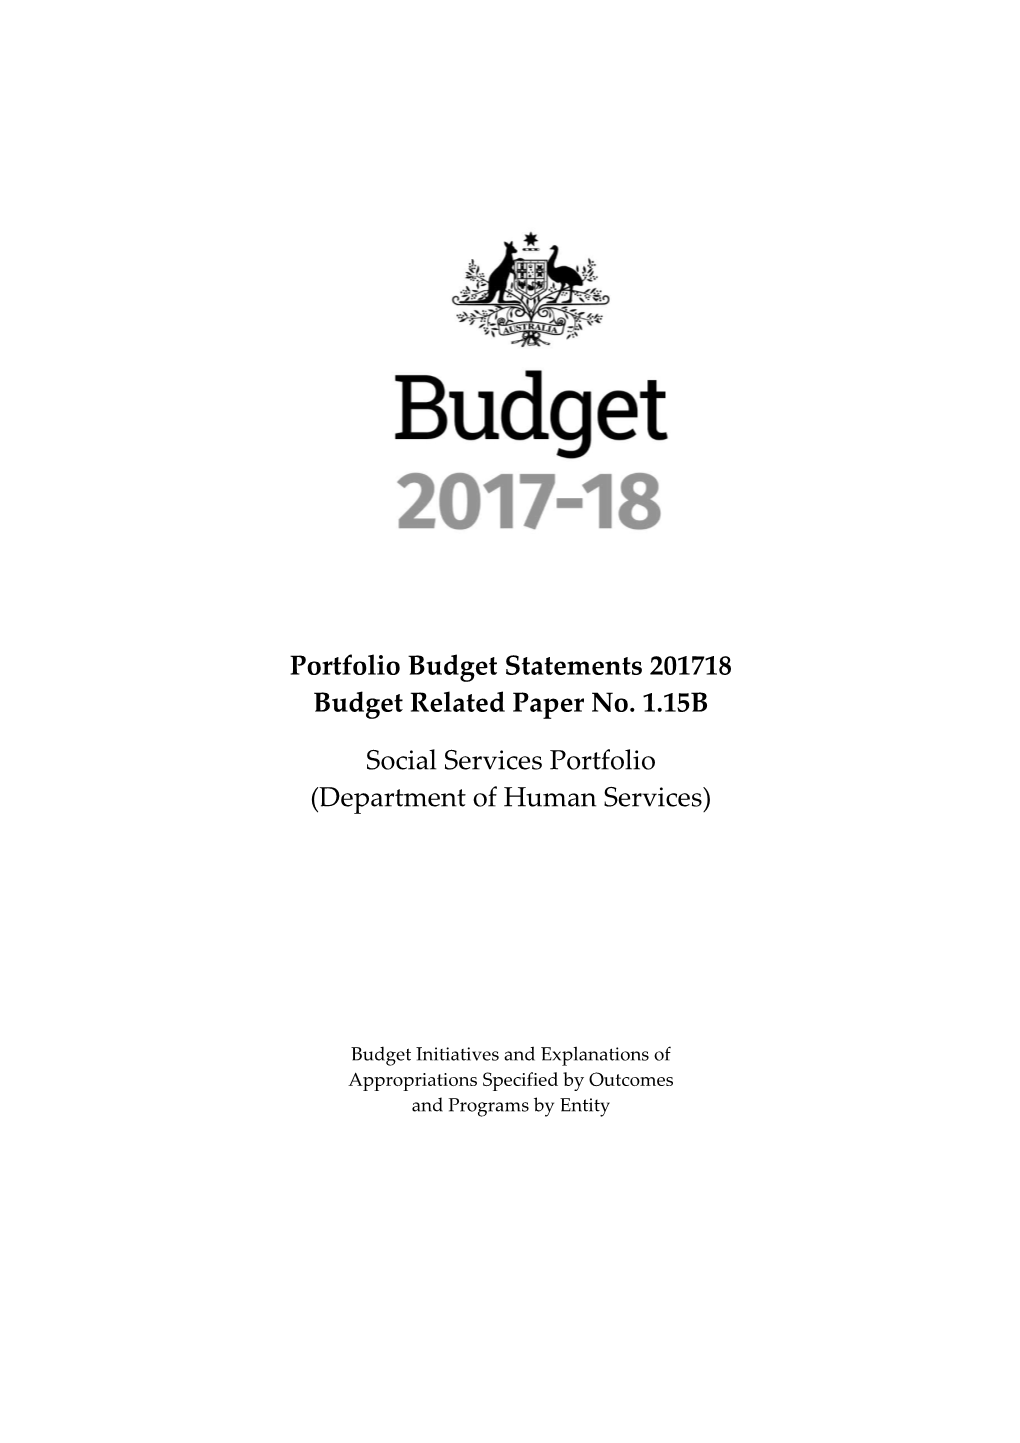 Portfolio Budget Statements 2017-18 - Budget Related Paper No. 1.15B